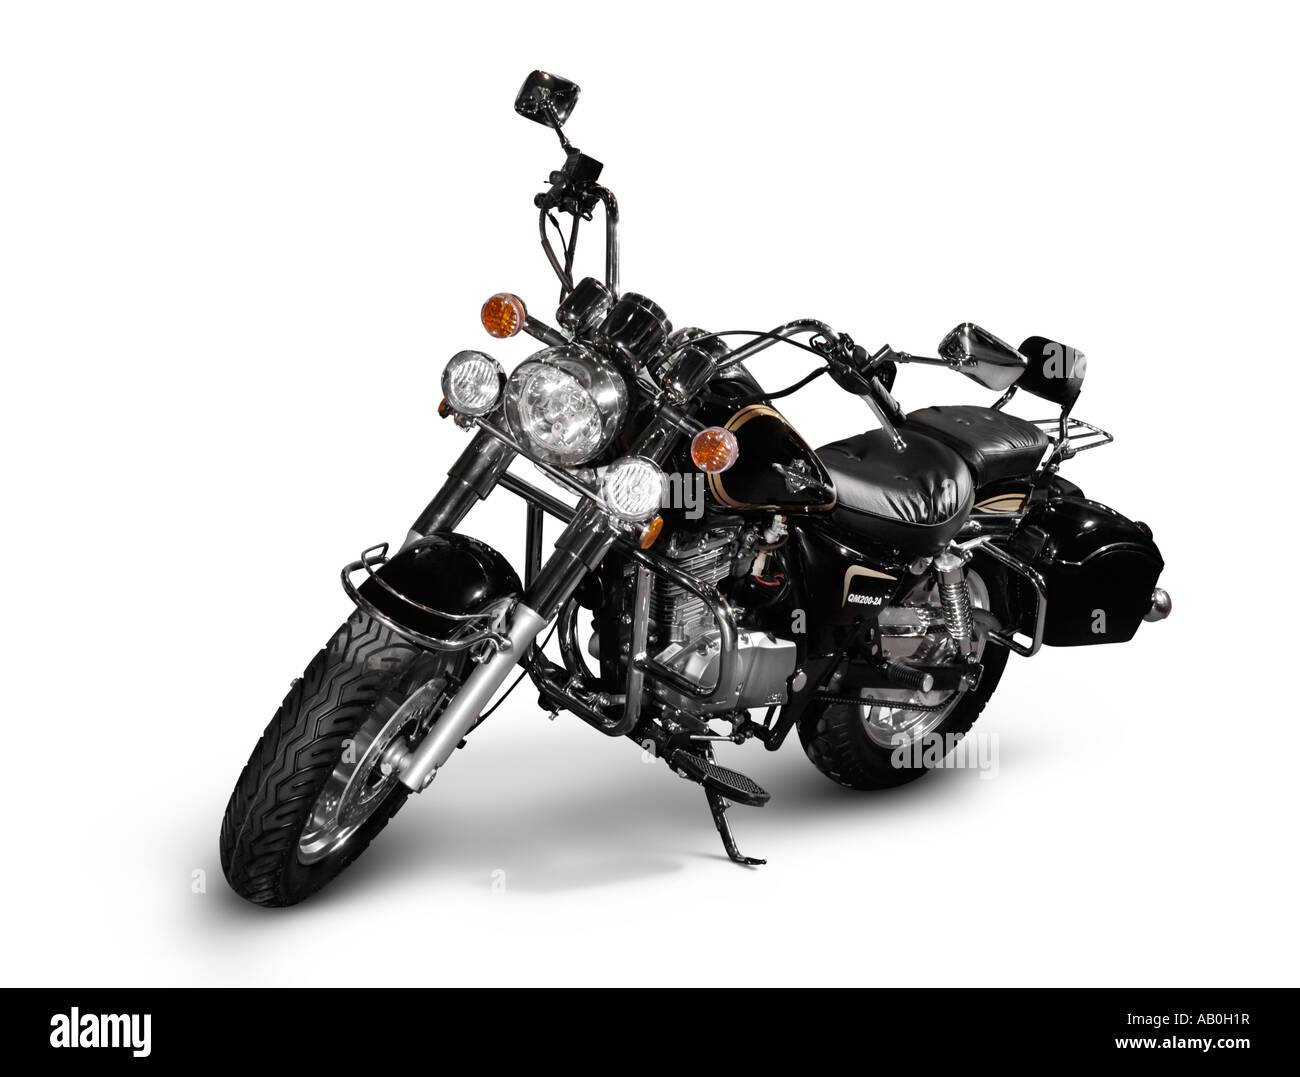 Motorcycle qingqi motorbike bike hi-res stock photography and images - Alamy